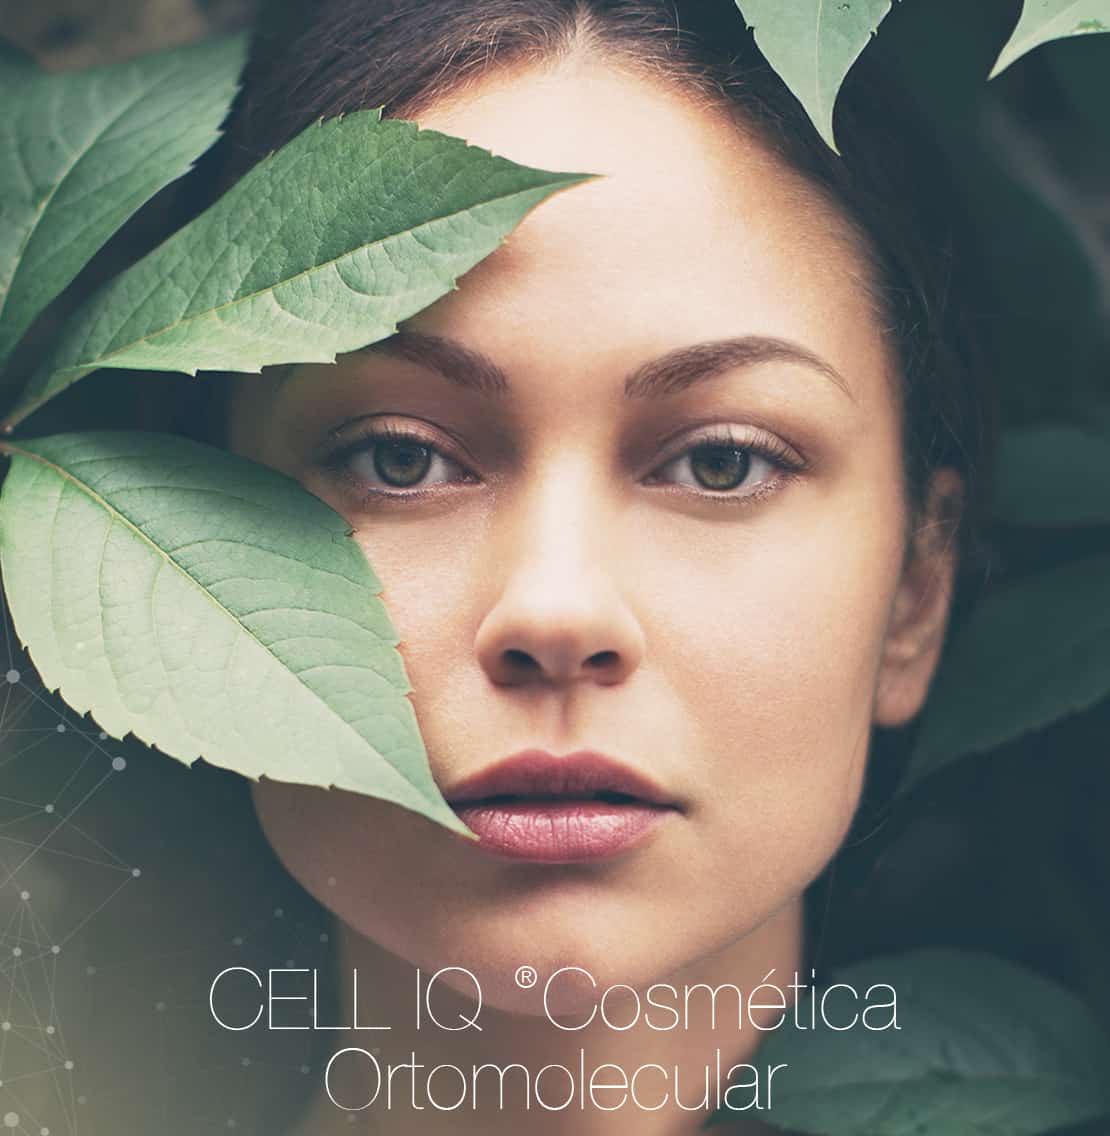 Cell IQ activos cosméticos ortomoleculares belium medical gijon piel rejuvenecimiento belleza natural